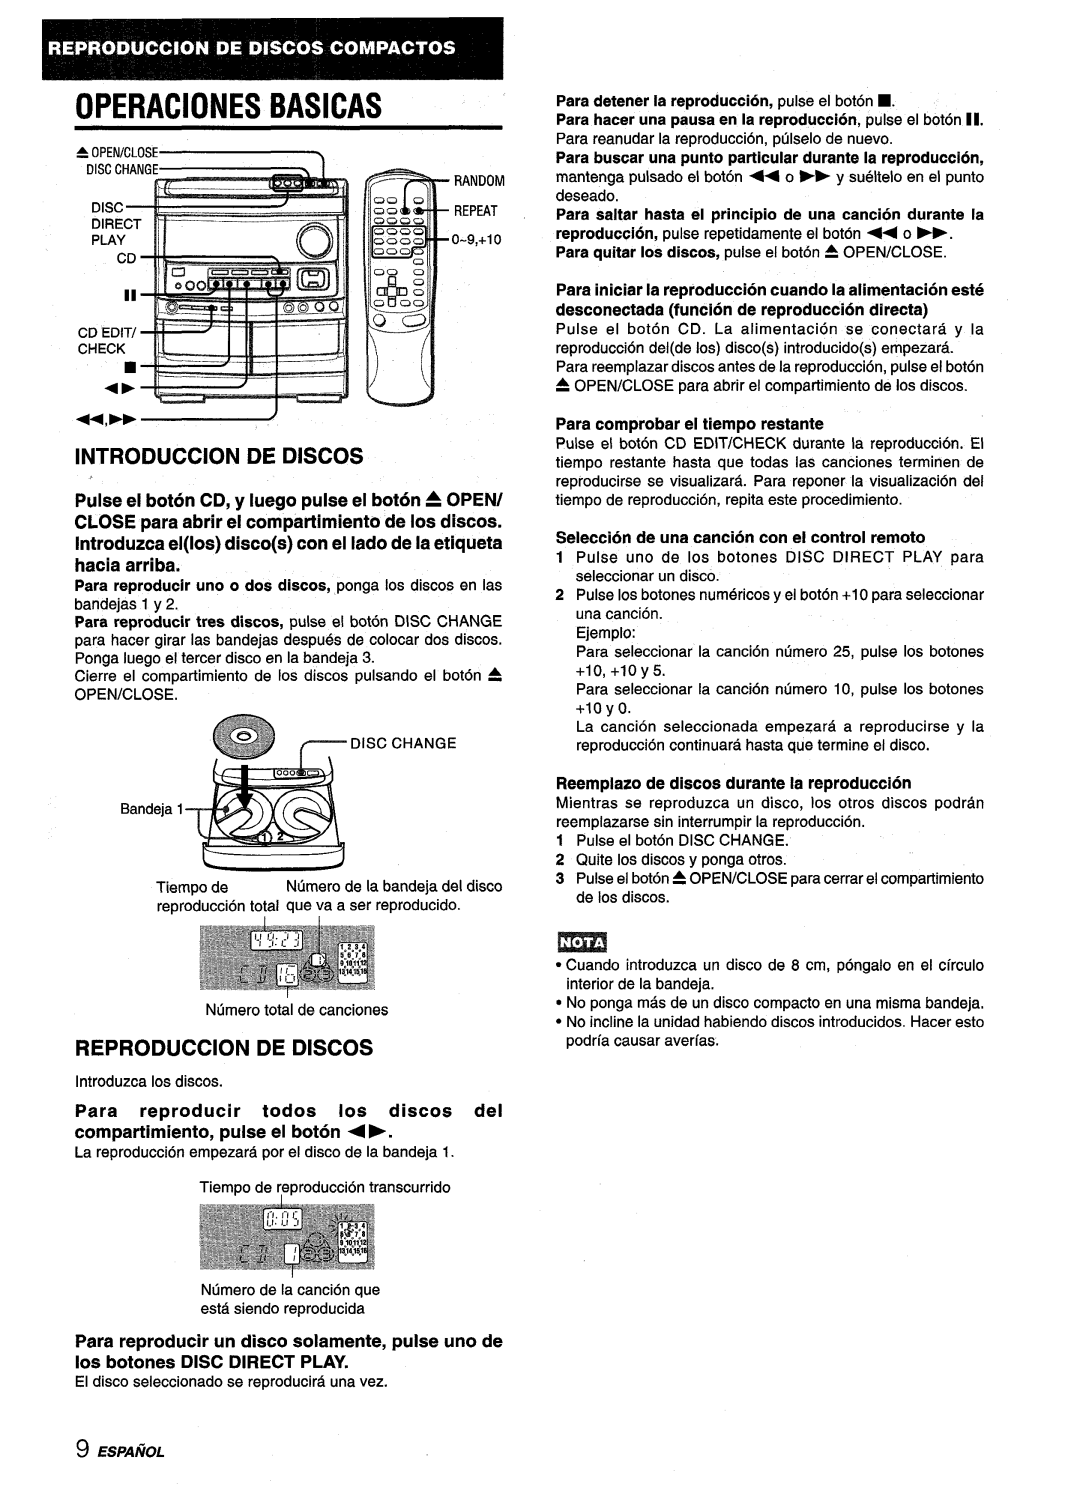 Aiwa NSX-V9000 Operaciones Basicas, Introduction De Discos, Reproduction De Discos, Para comprobar ei tiempo restante 